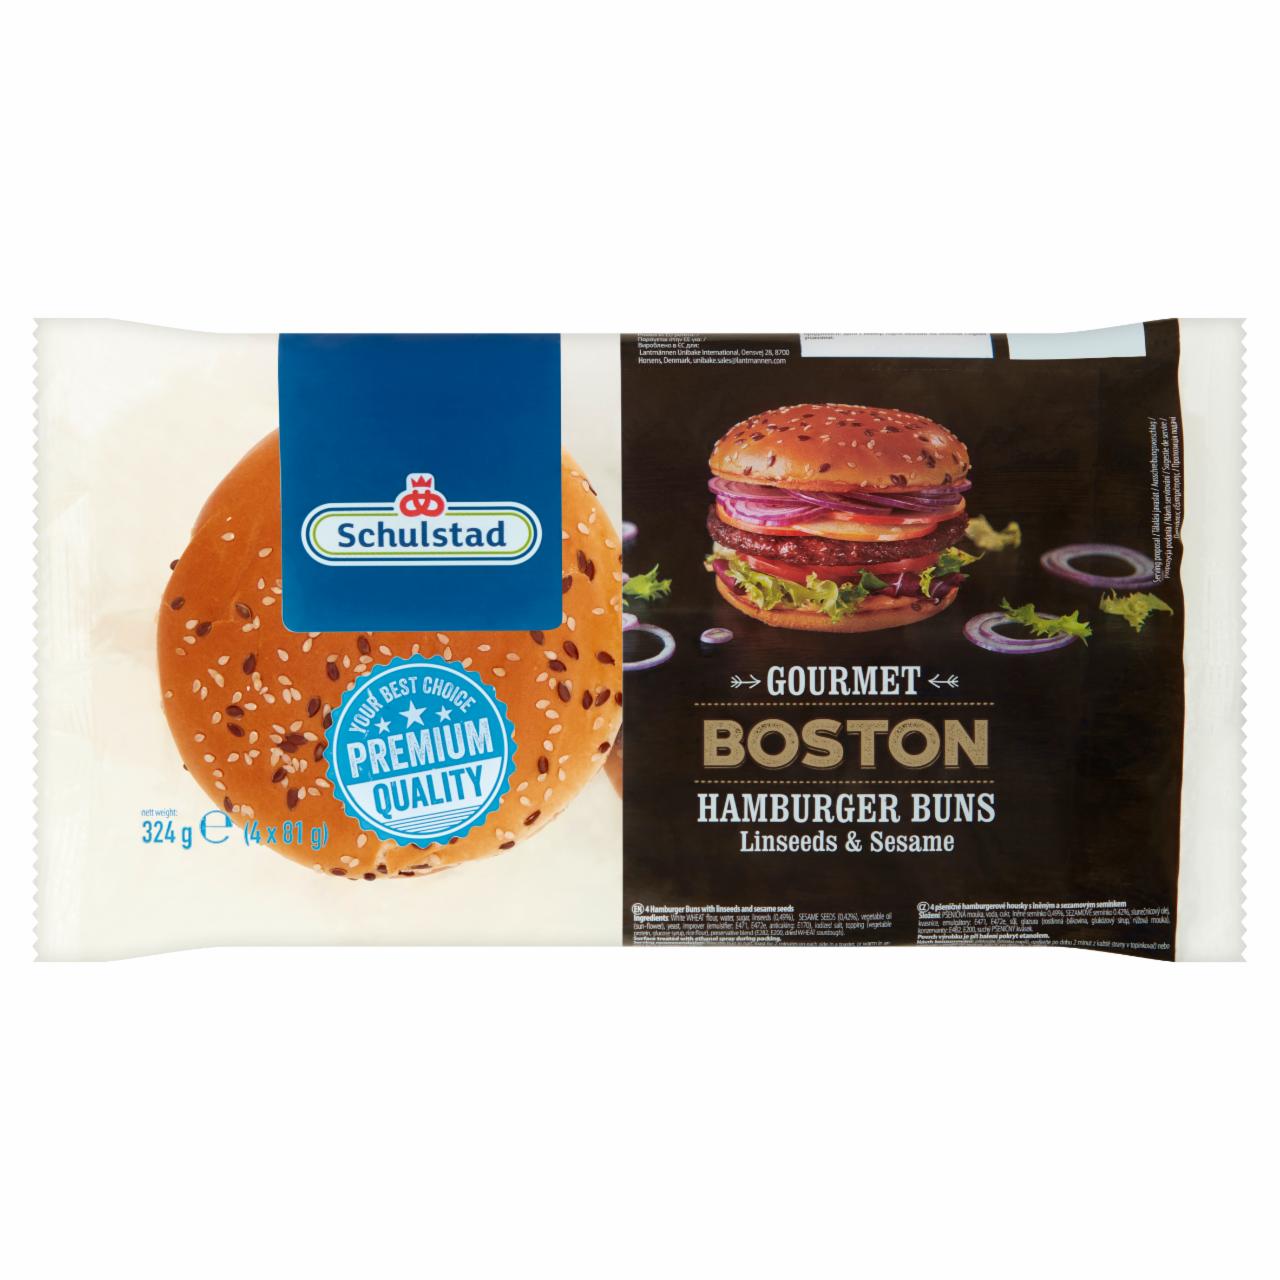 Fotografie - Gourmet boston hamburger buns linseeds & sesame